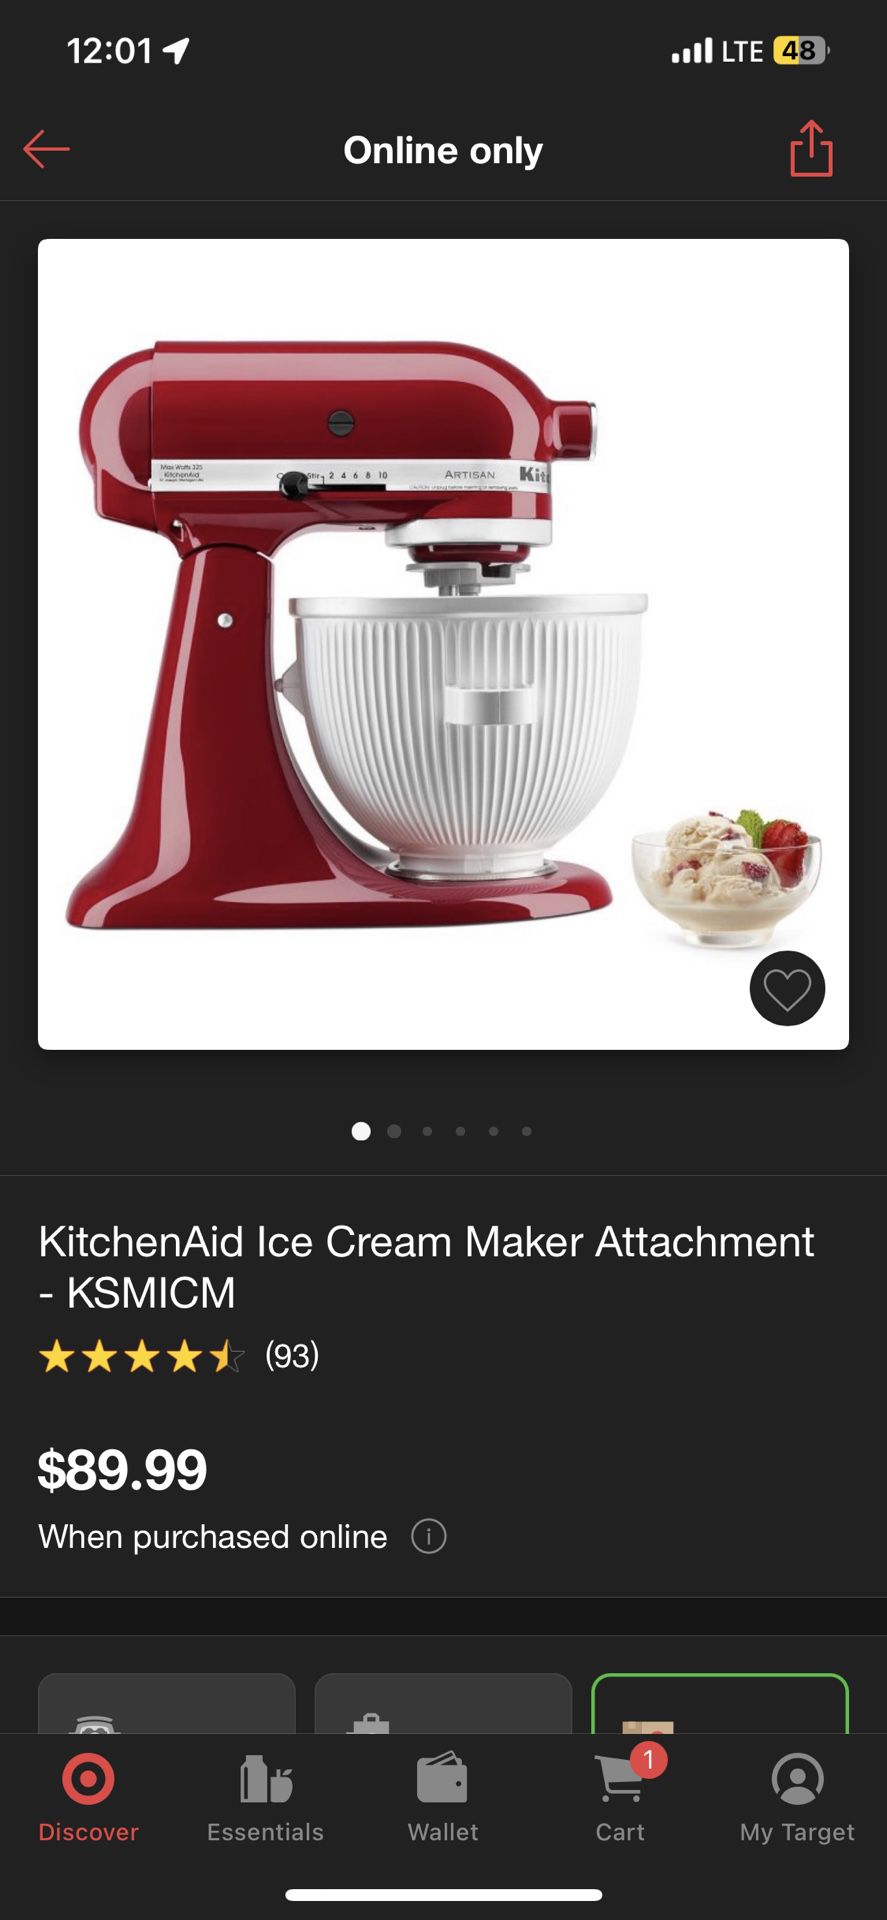 KitchenAid Ice Cream Maker Attachment - KSMICM 